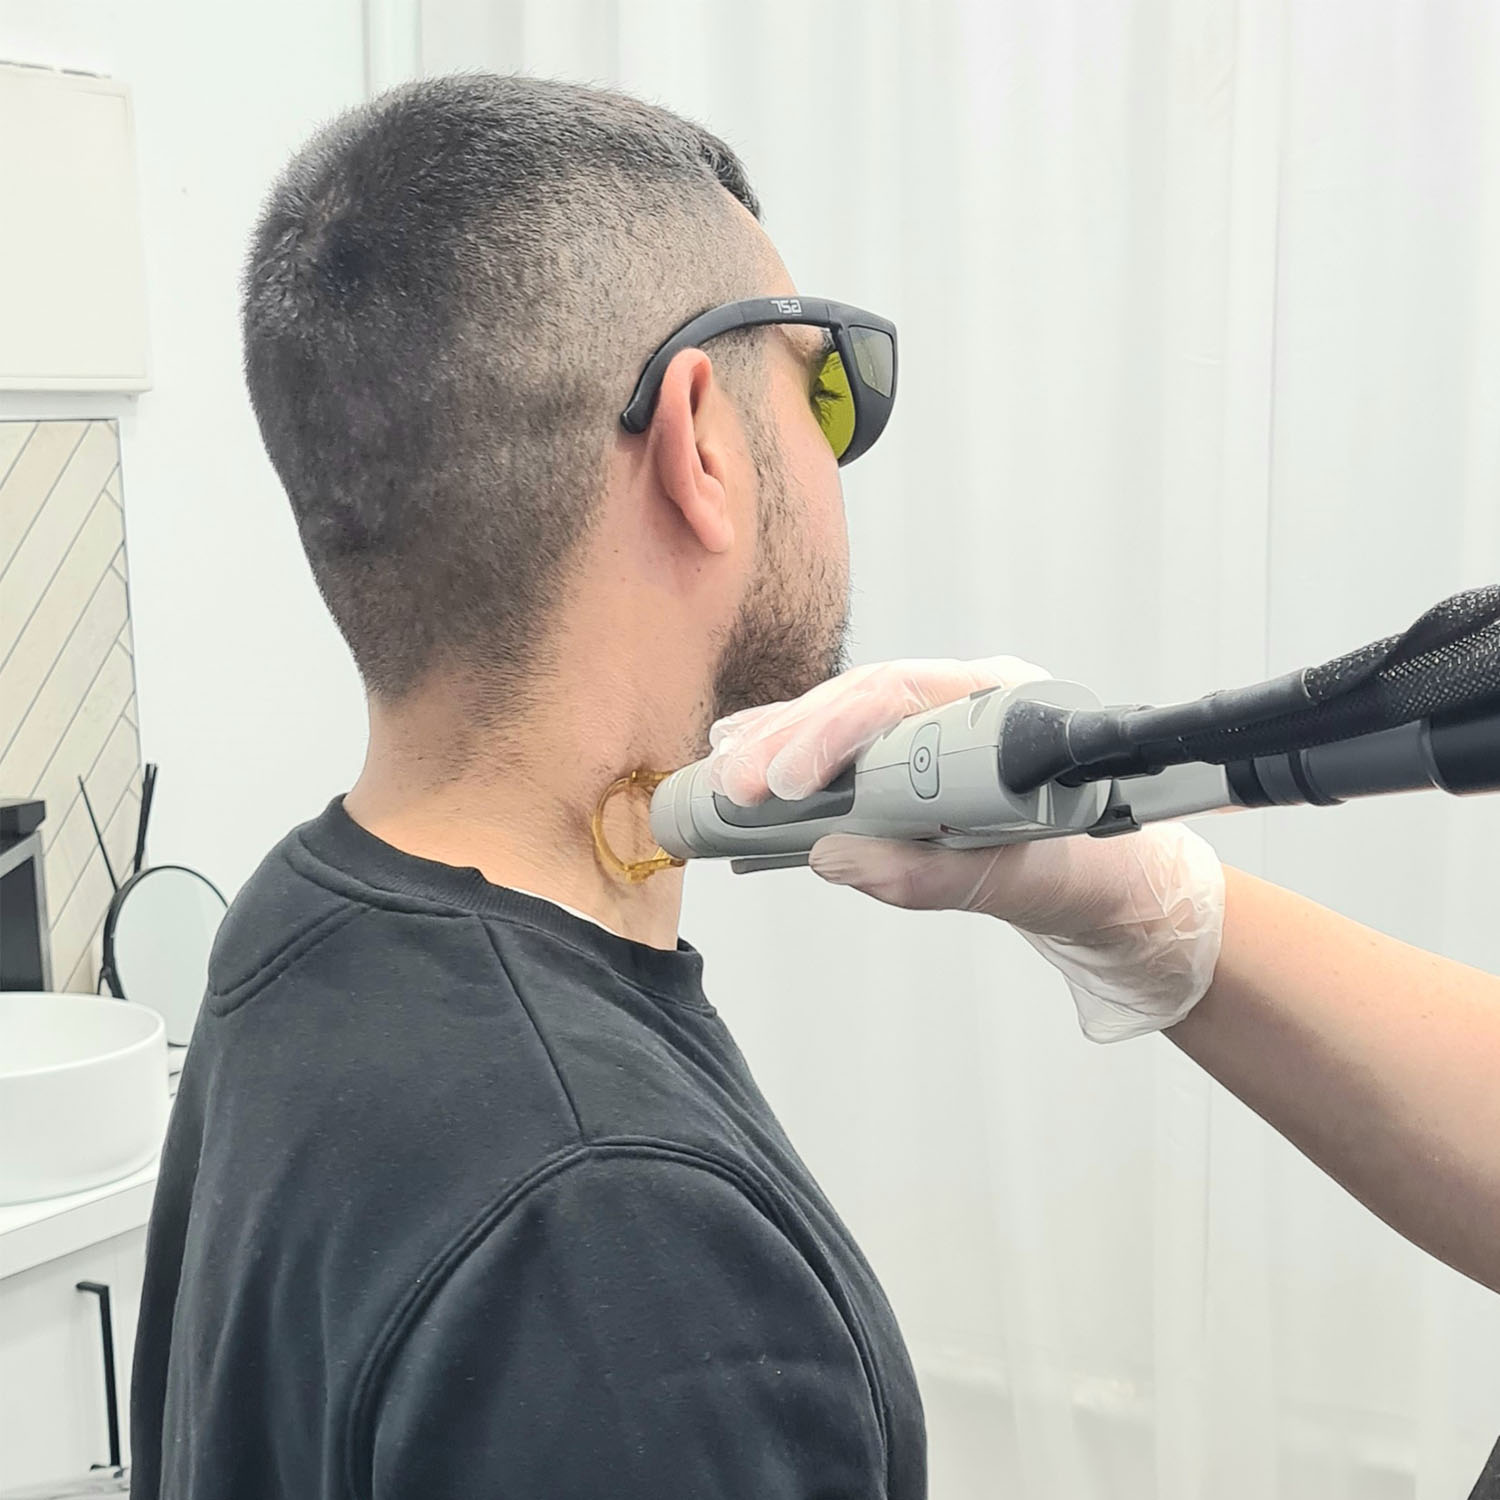 Medical Grade Laser Hair Removal using modern equipment and technique at Rejuvenate Laser & Skin Clinic